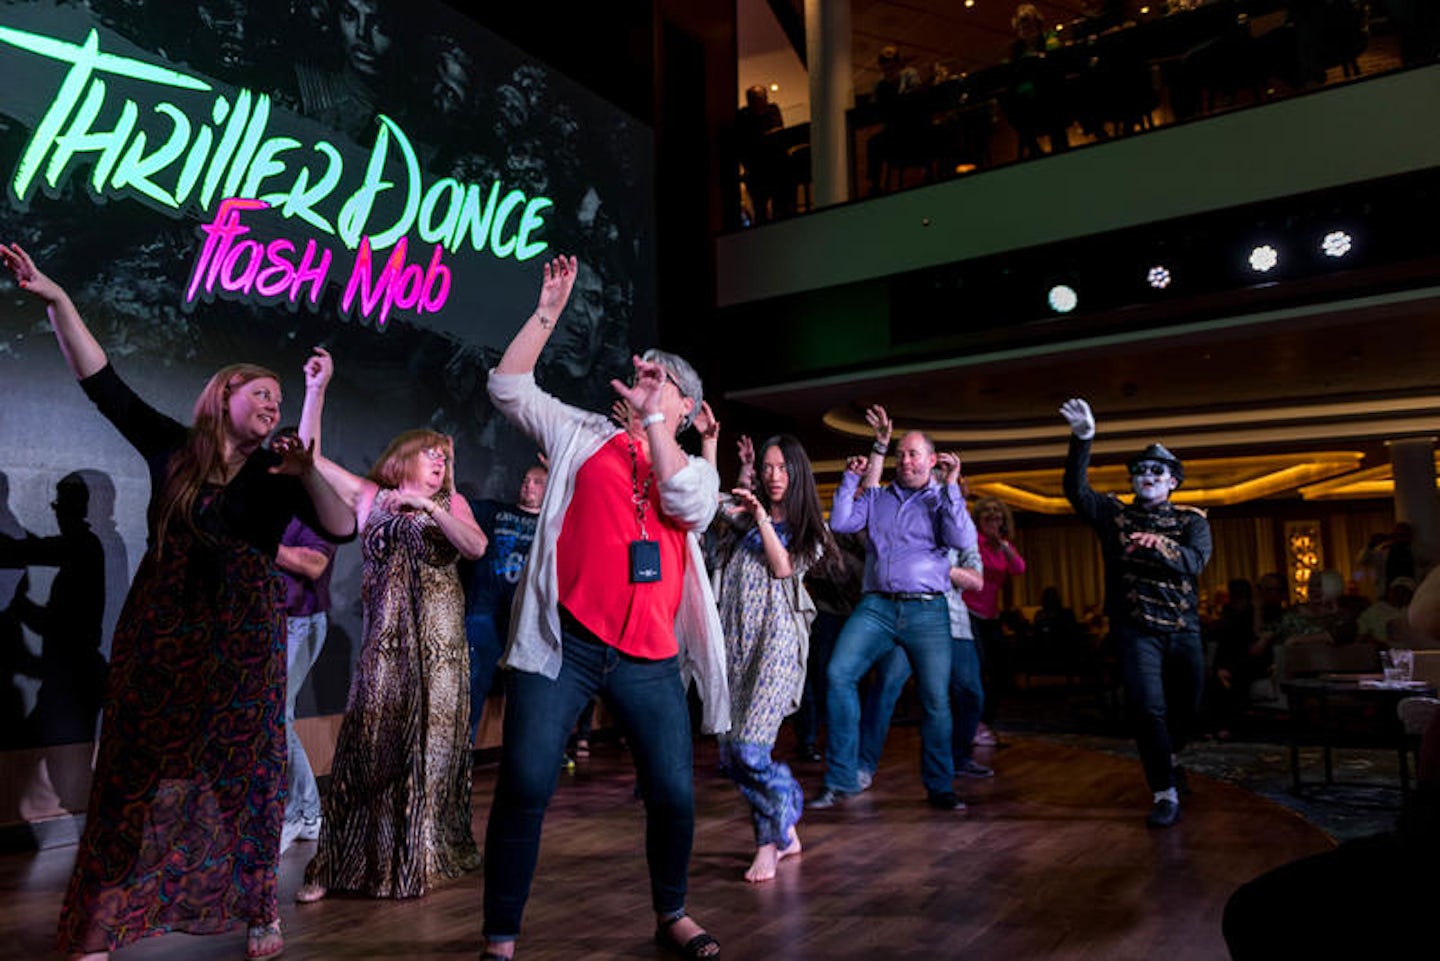 "Thriller Flash Mob" in The Atrium on Norwegian Bliss